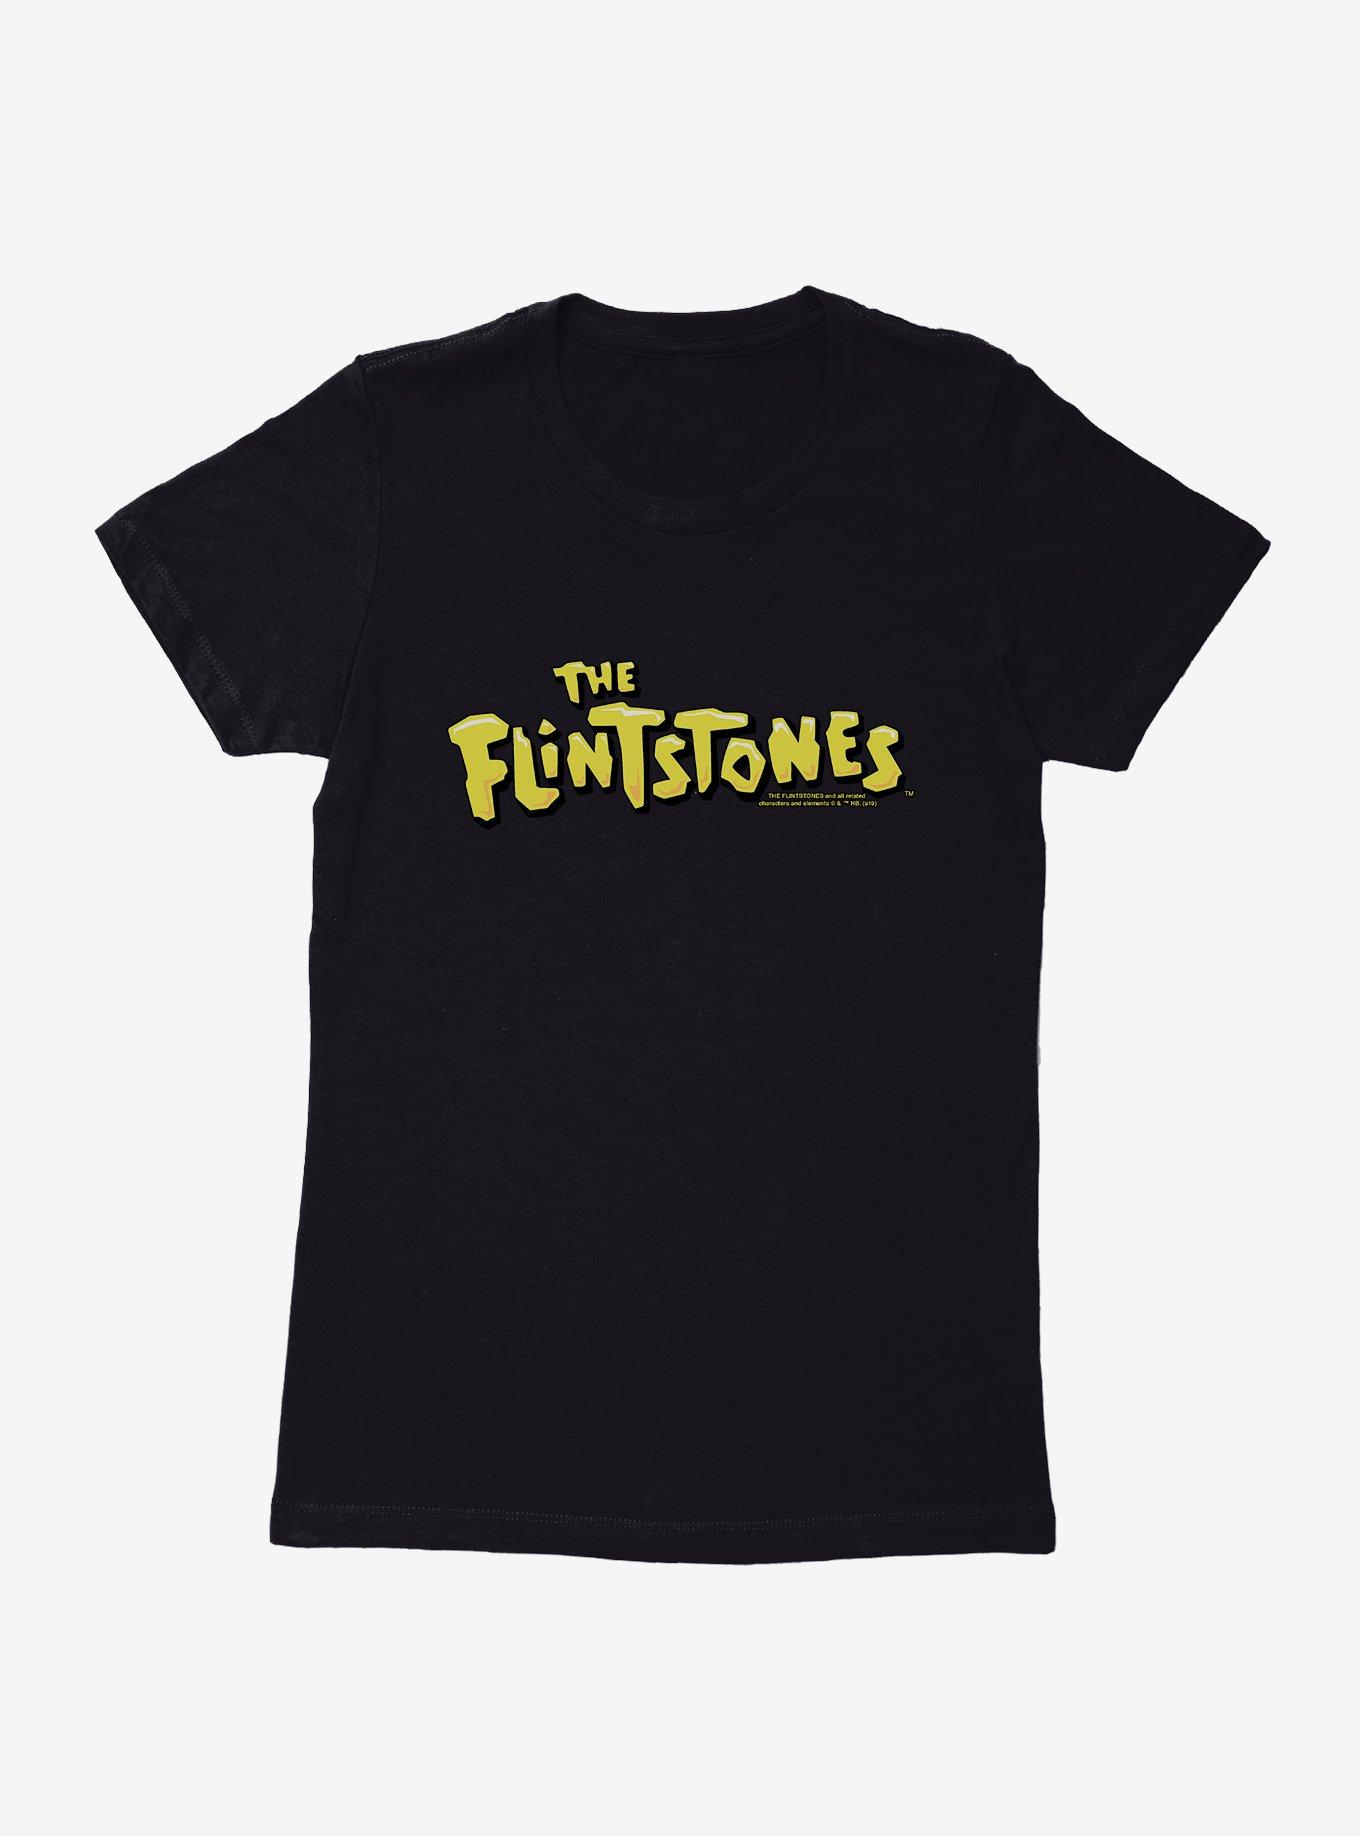 The Flintstones Logo Womens T-Shirt BoxLunch 